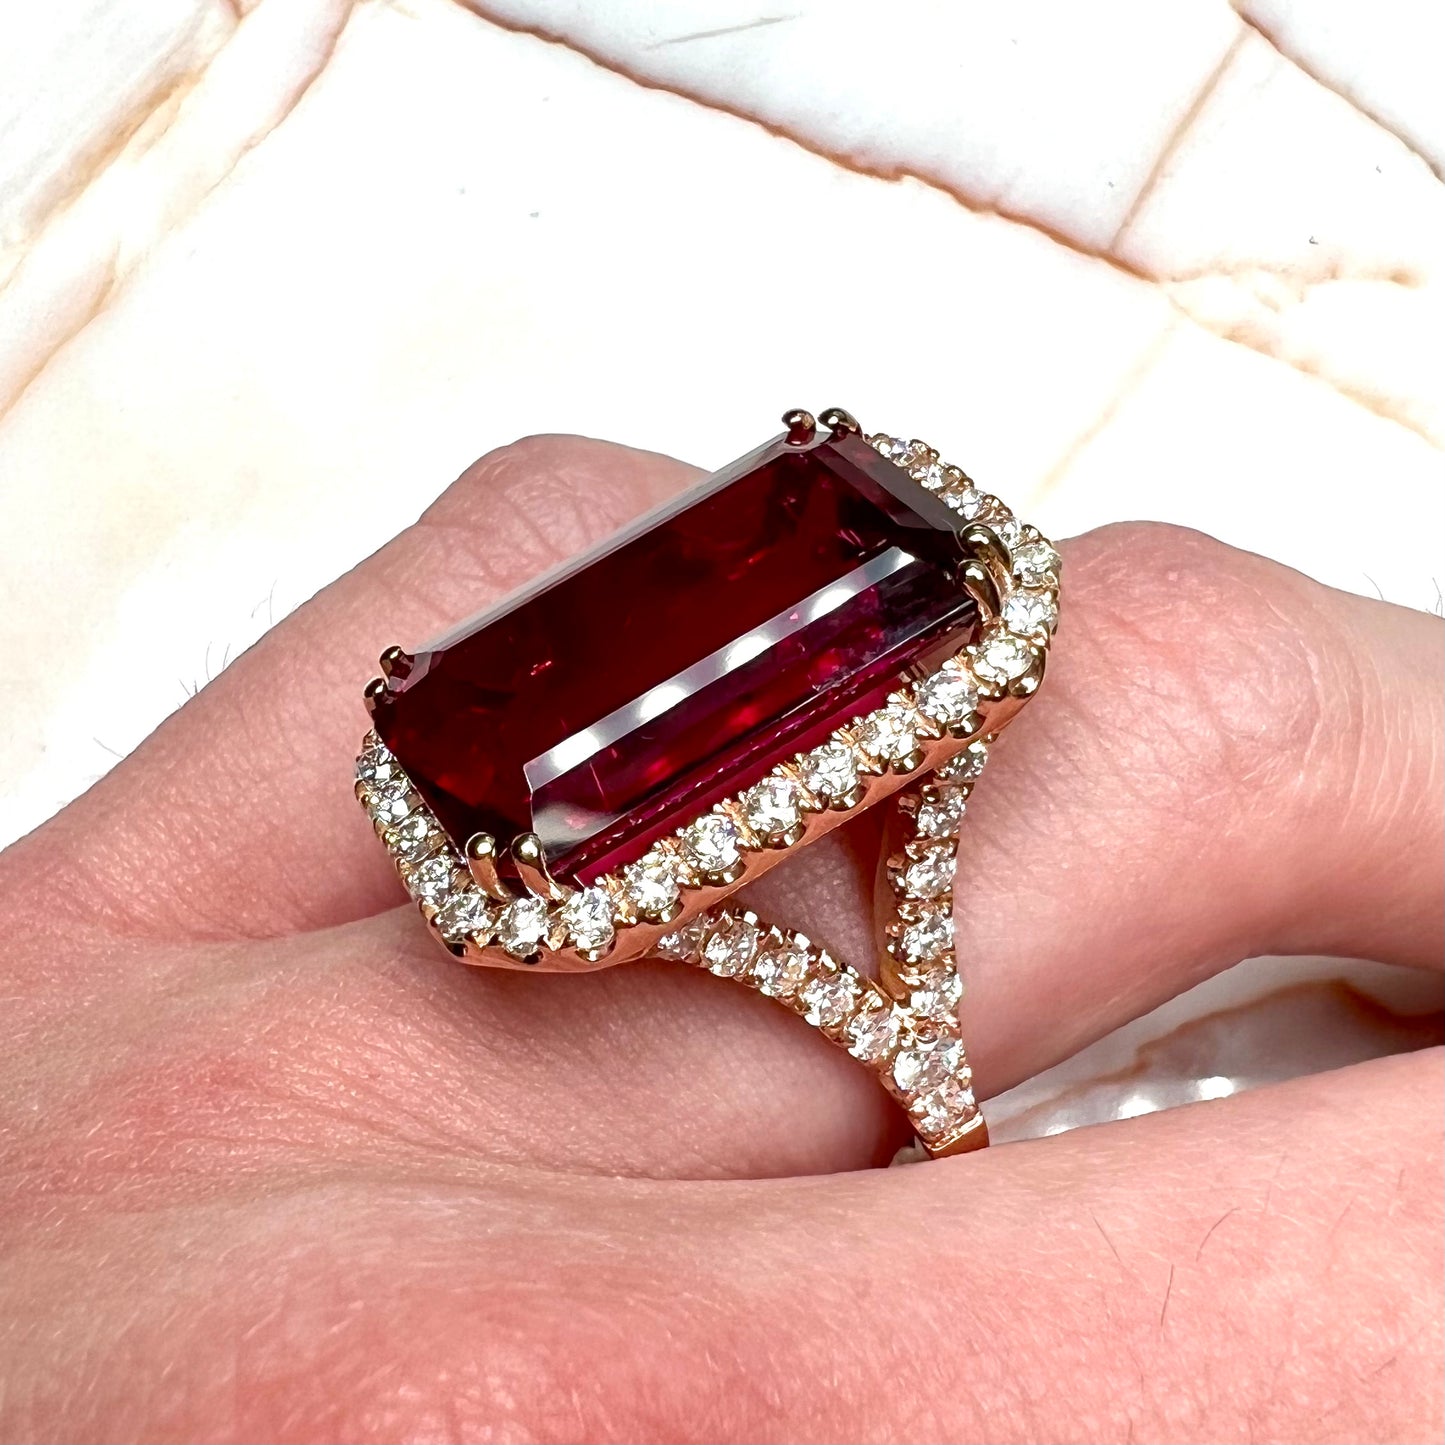 Red emerald cut rubellite tourmaline gemstone set with near flawless round cut diamonds in rose gold.